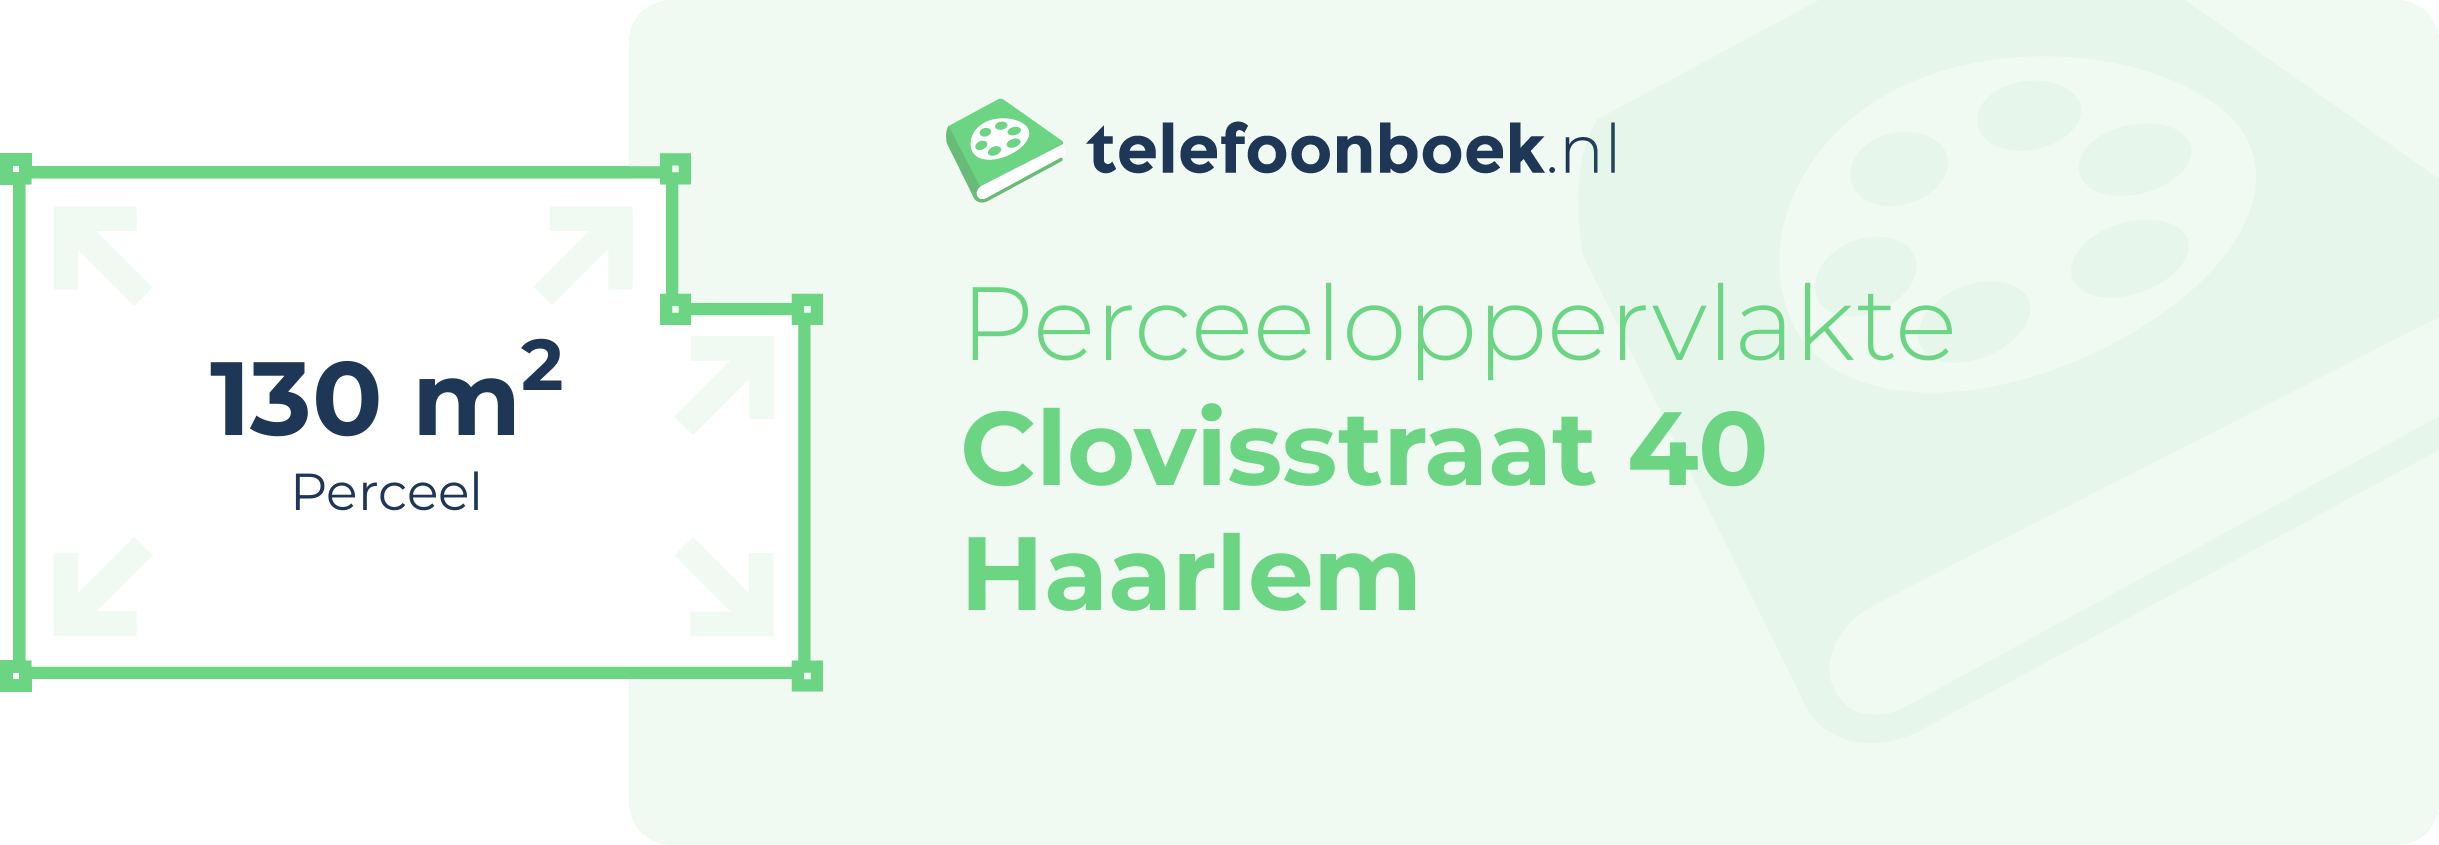 Perceeloppervlakte Clovisstraat 40 Haarlem